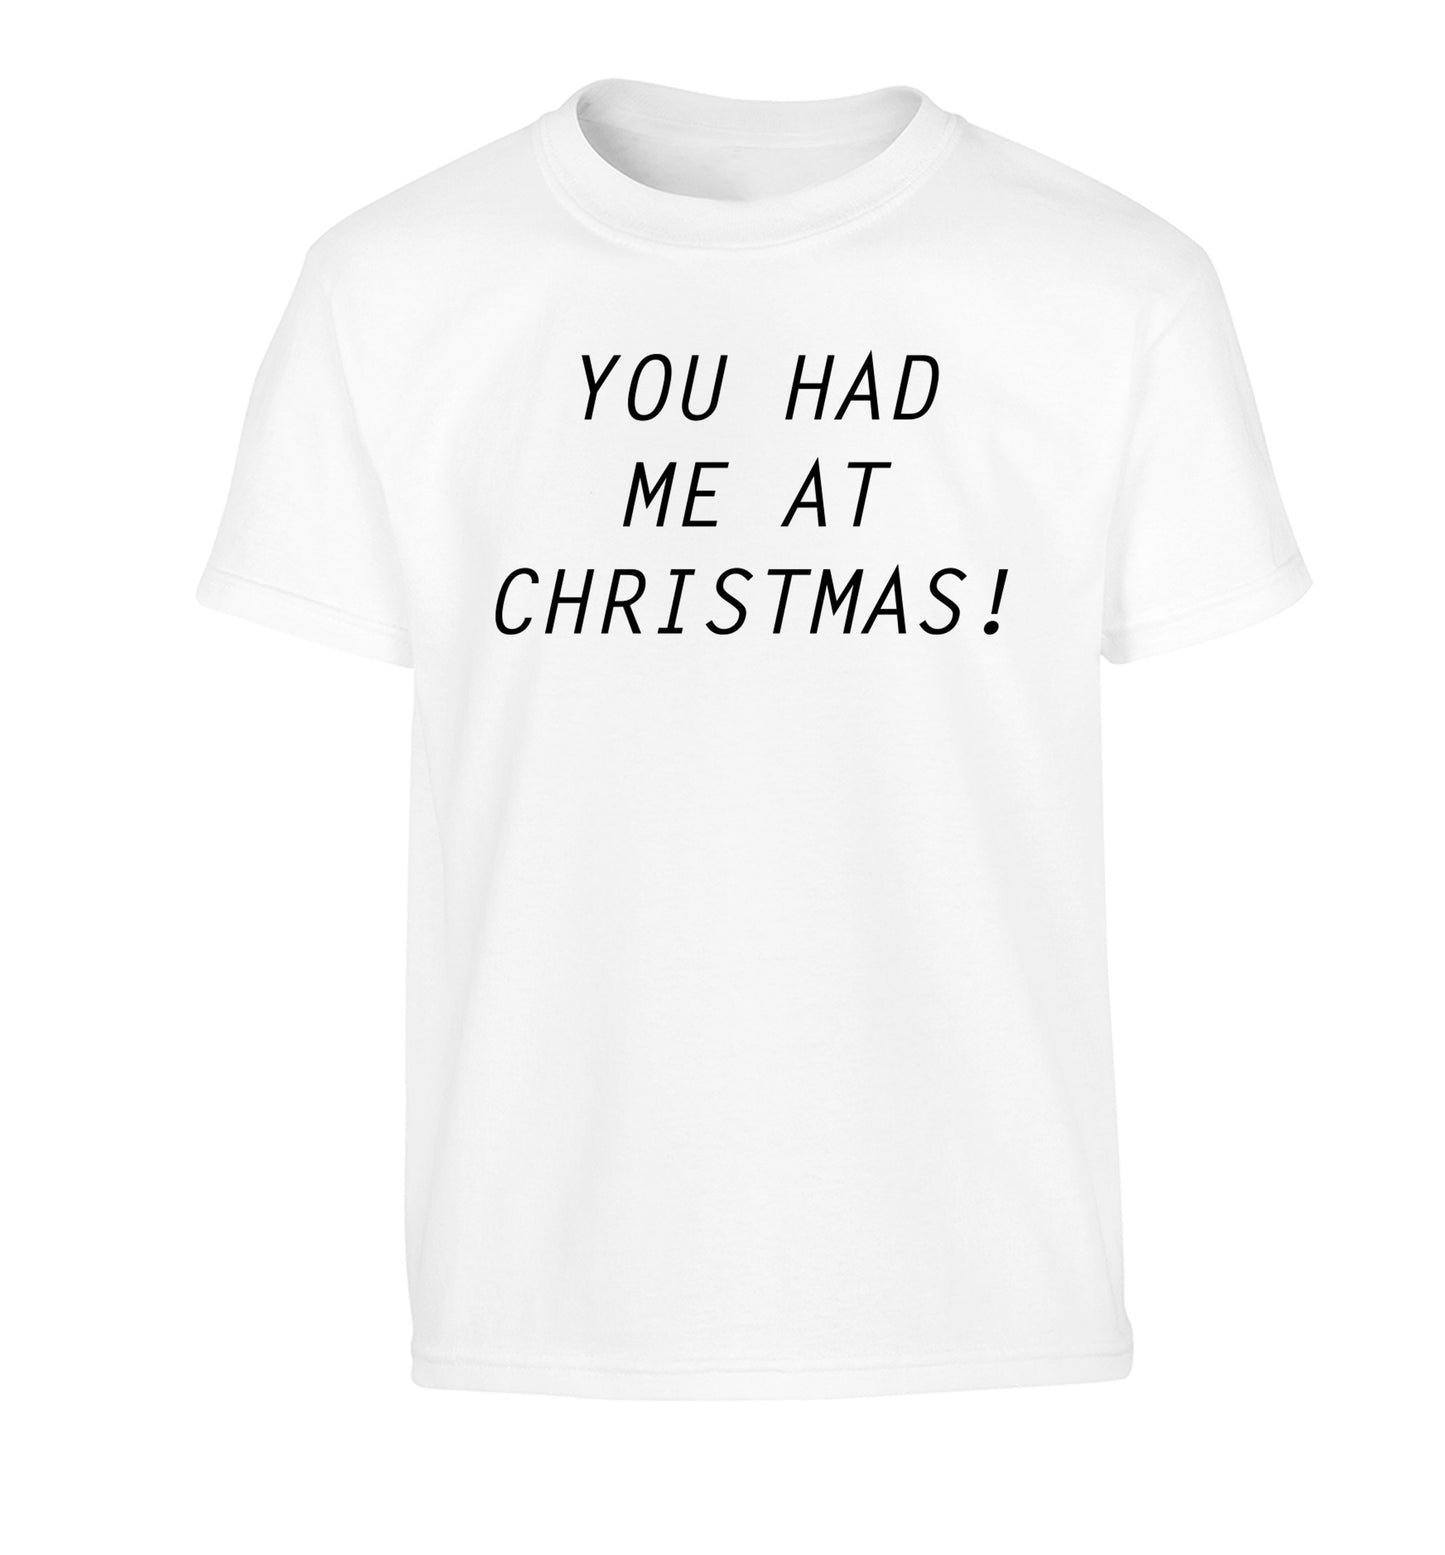 You had me at Christmas Children's white Tshirt 12-14 Years